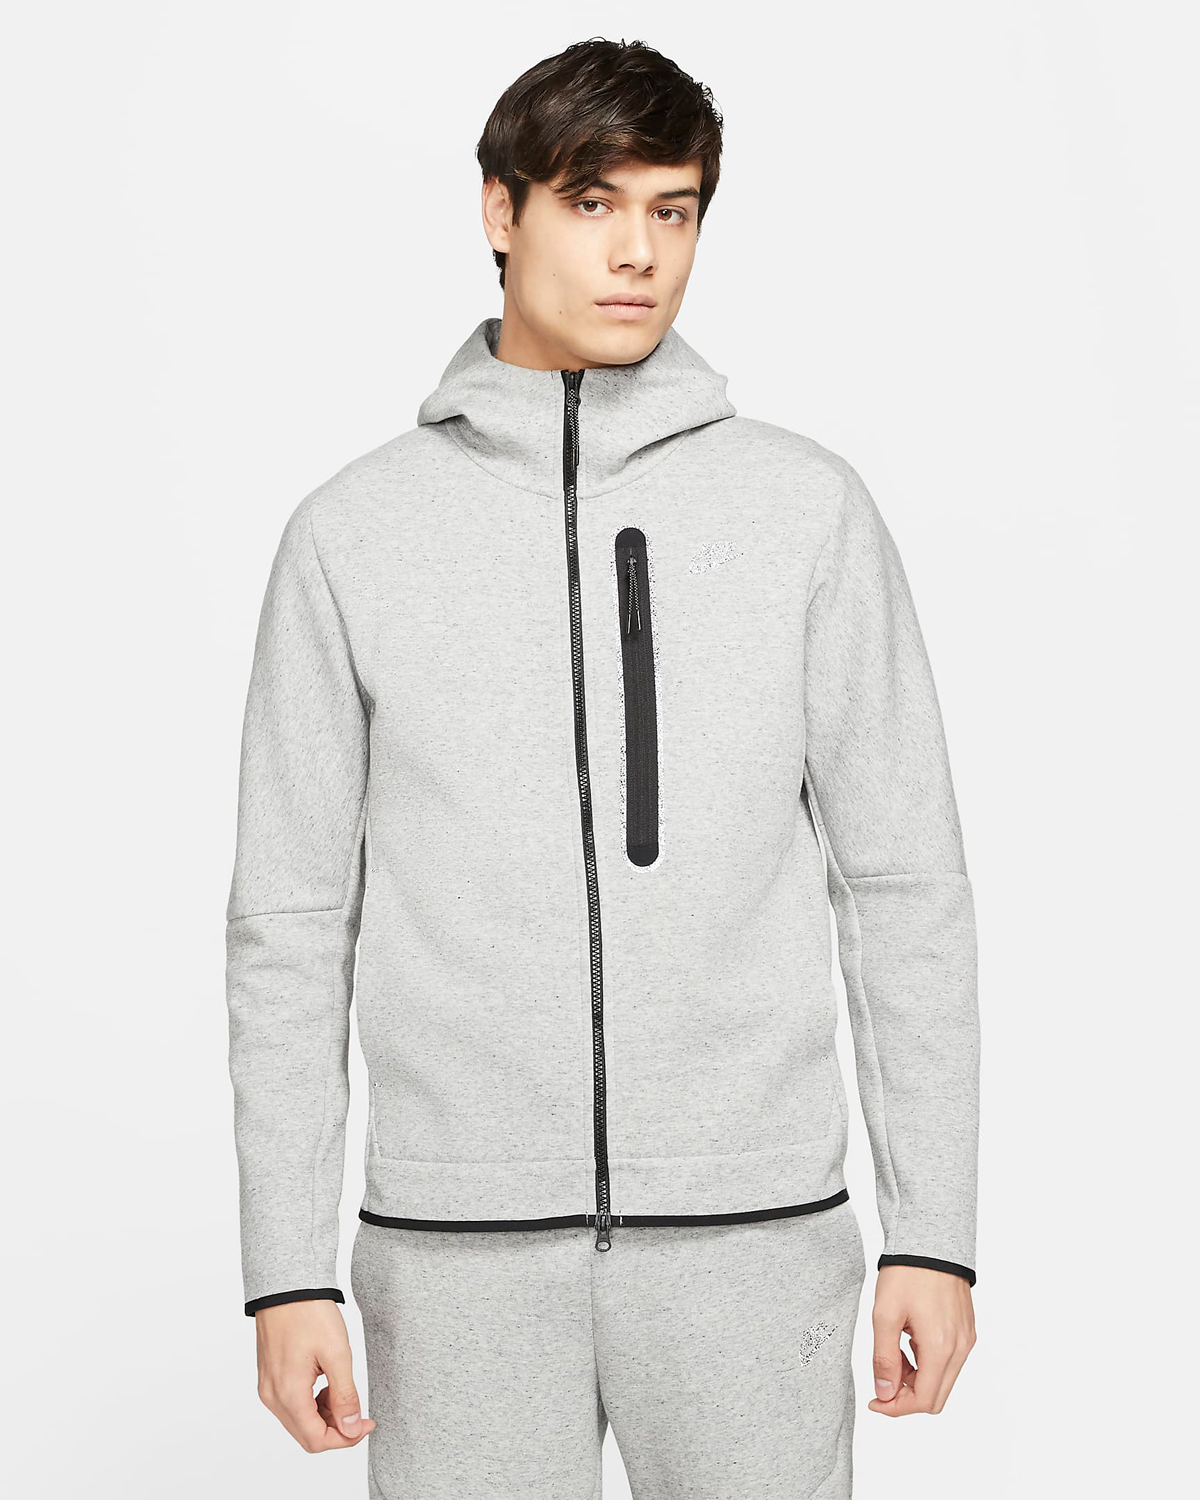 nike-tech-fleece-zip-hoodie-grey